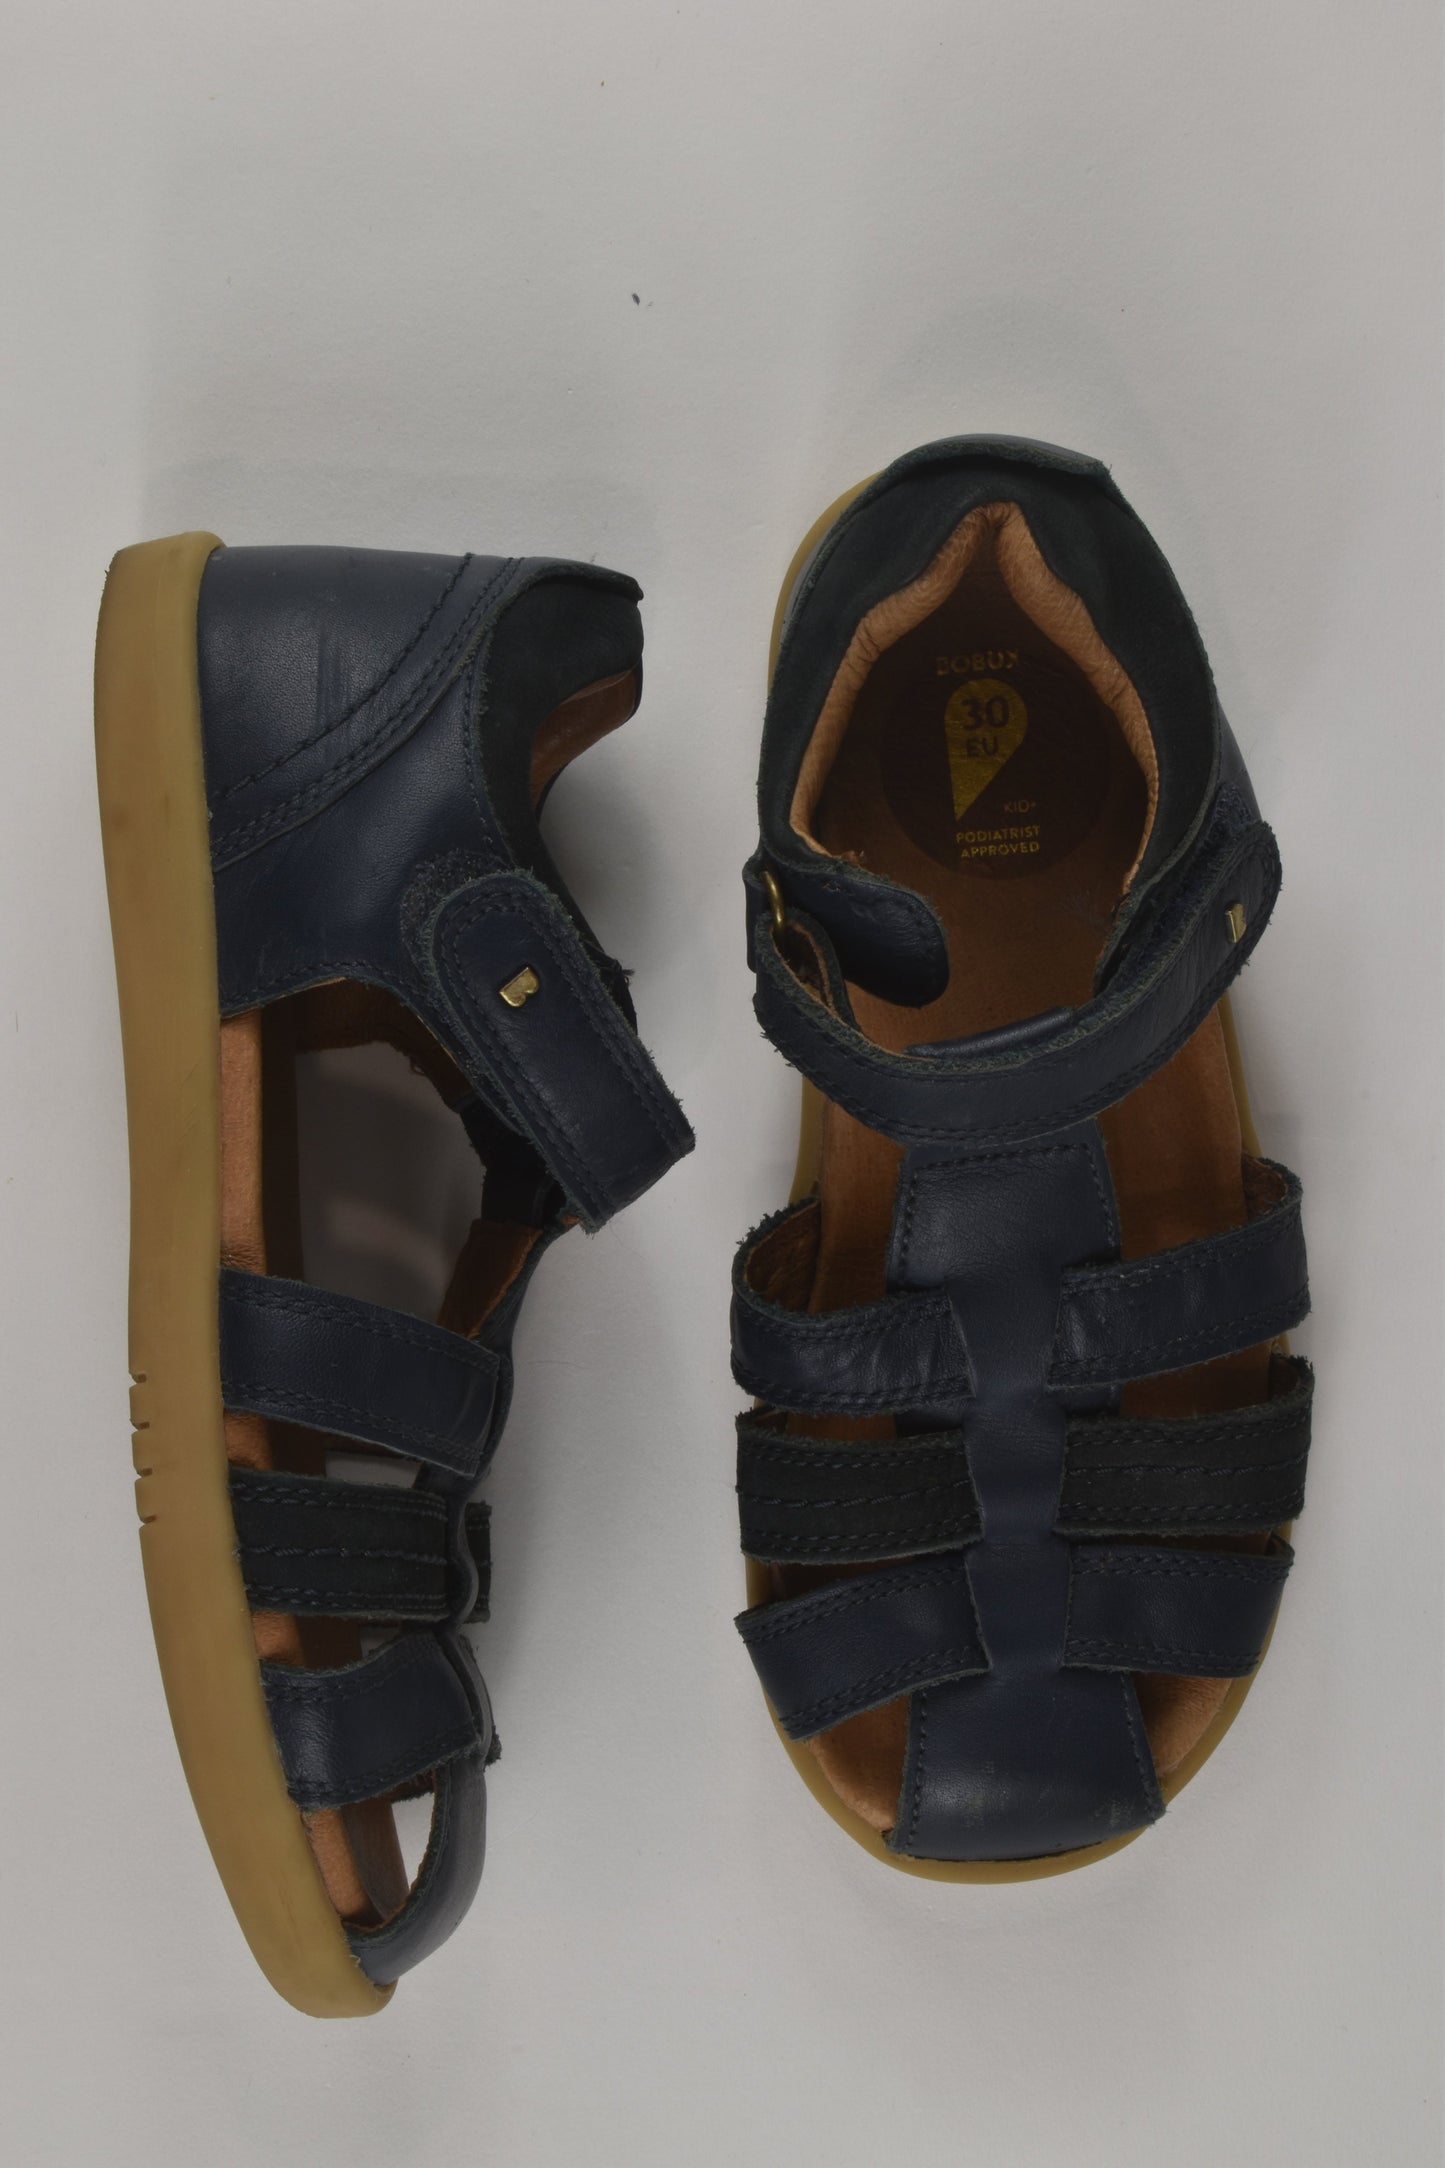 Bobux Size EU 30 Leather Sandals